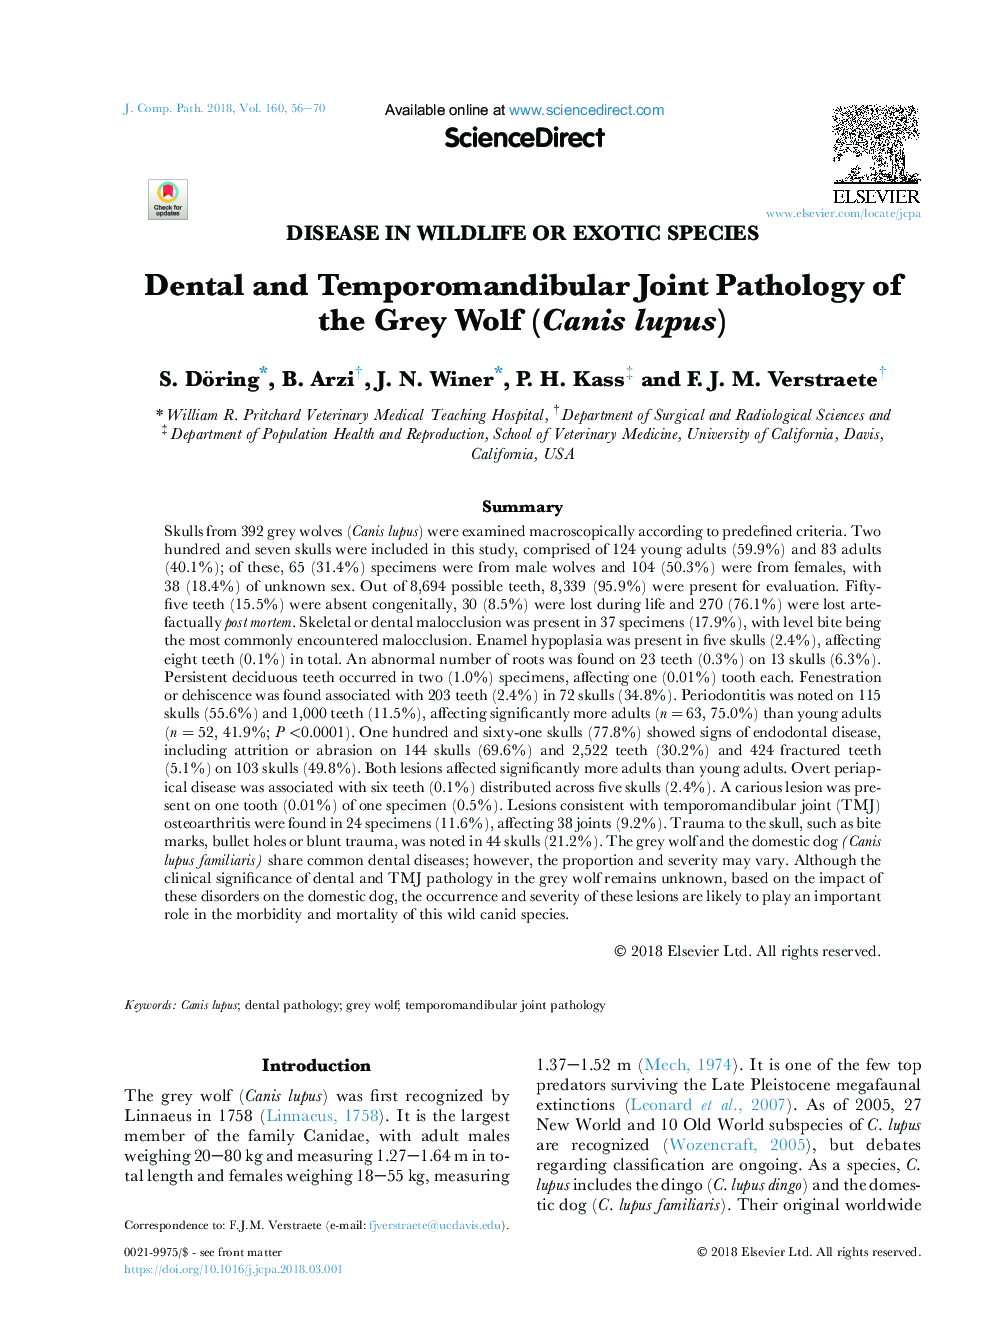 Dental and Temporomandibular Joint Pathology of the Grey Wolf (Canis lupus)